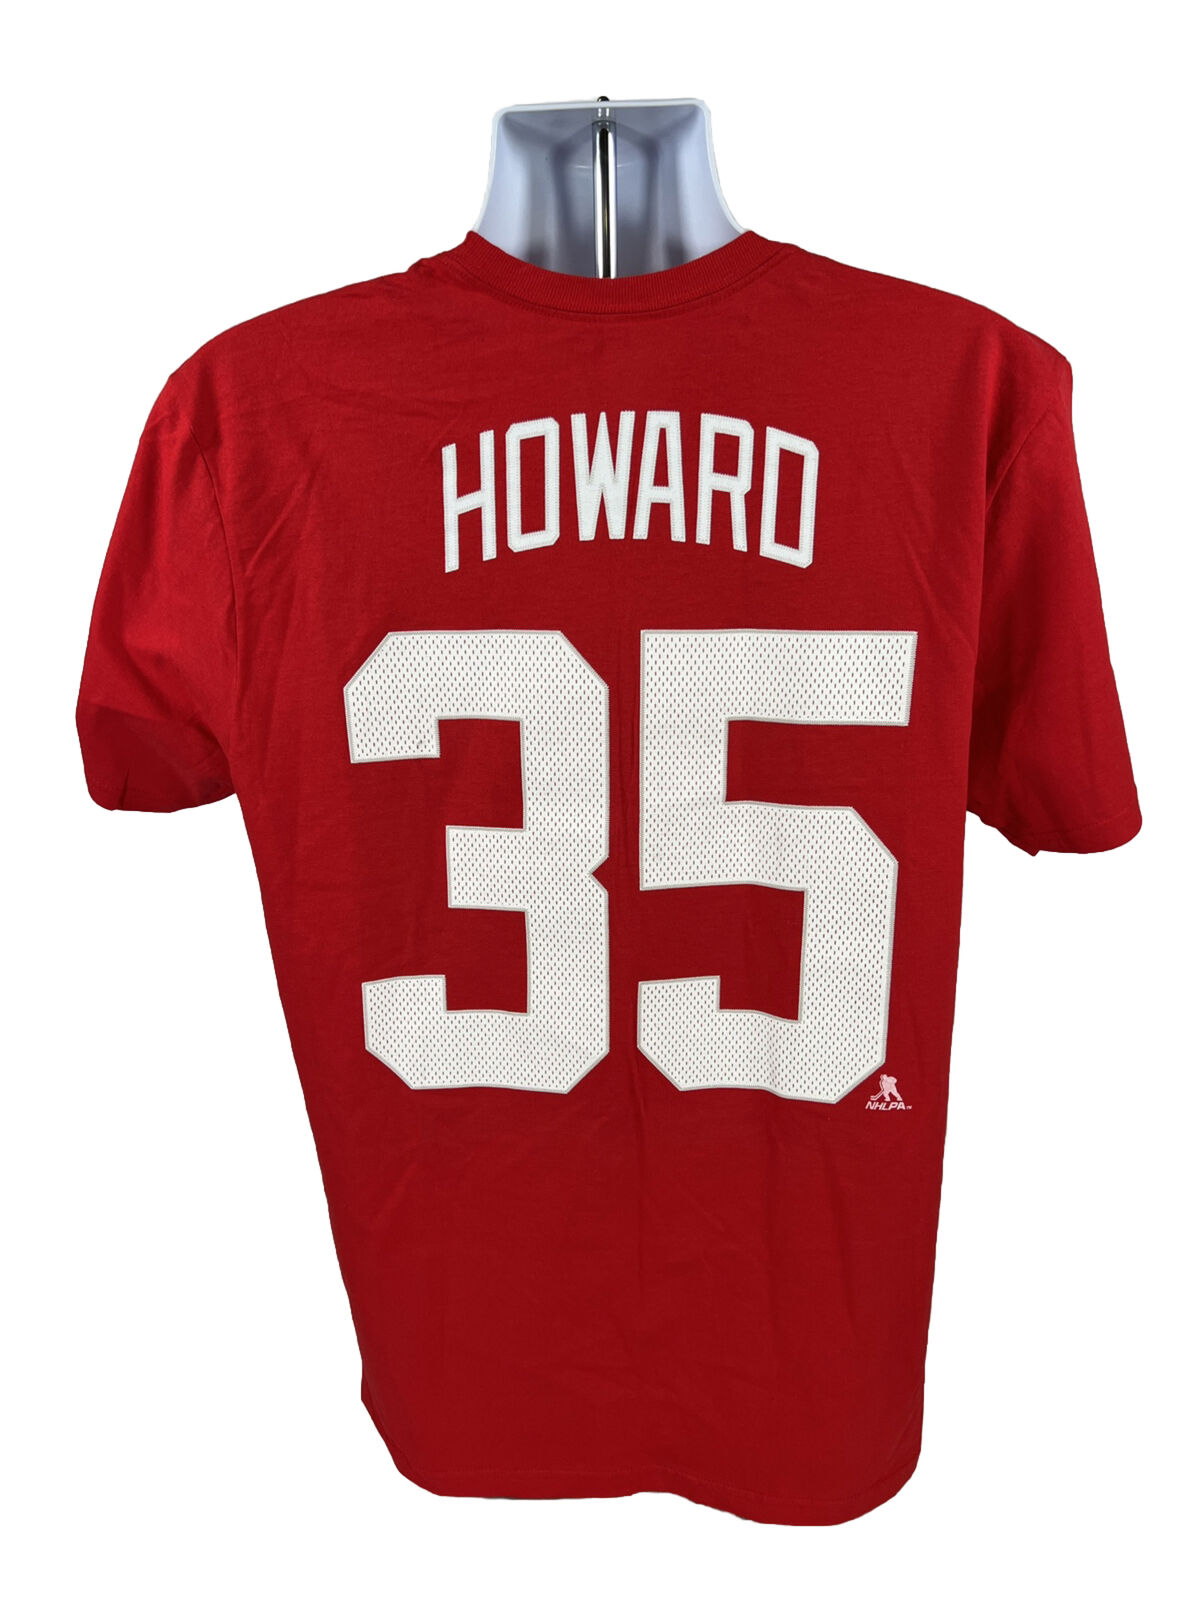 Reebok Camiseta Red Wings #35 Howard para hombre - L